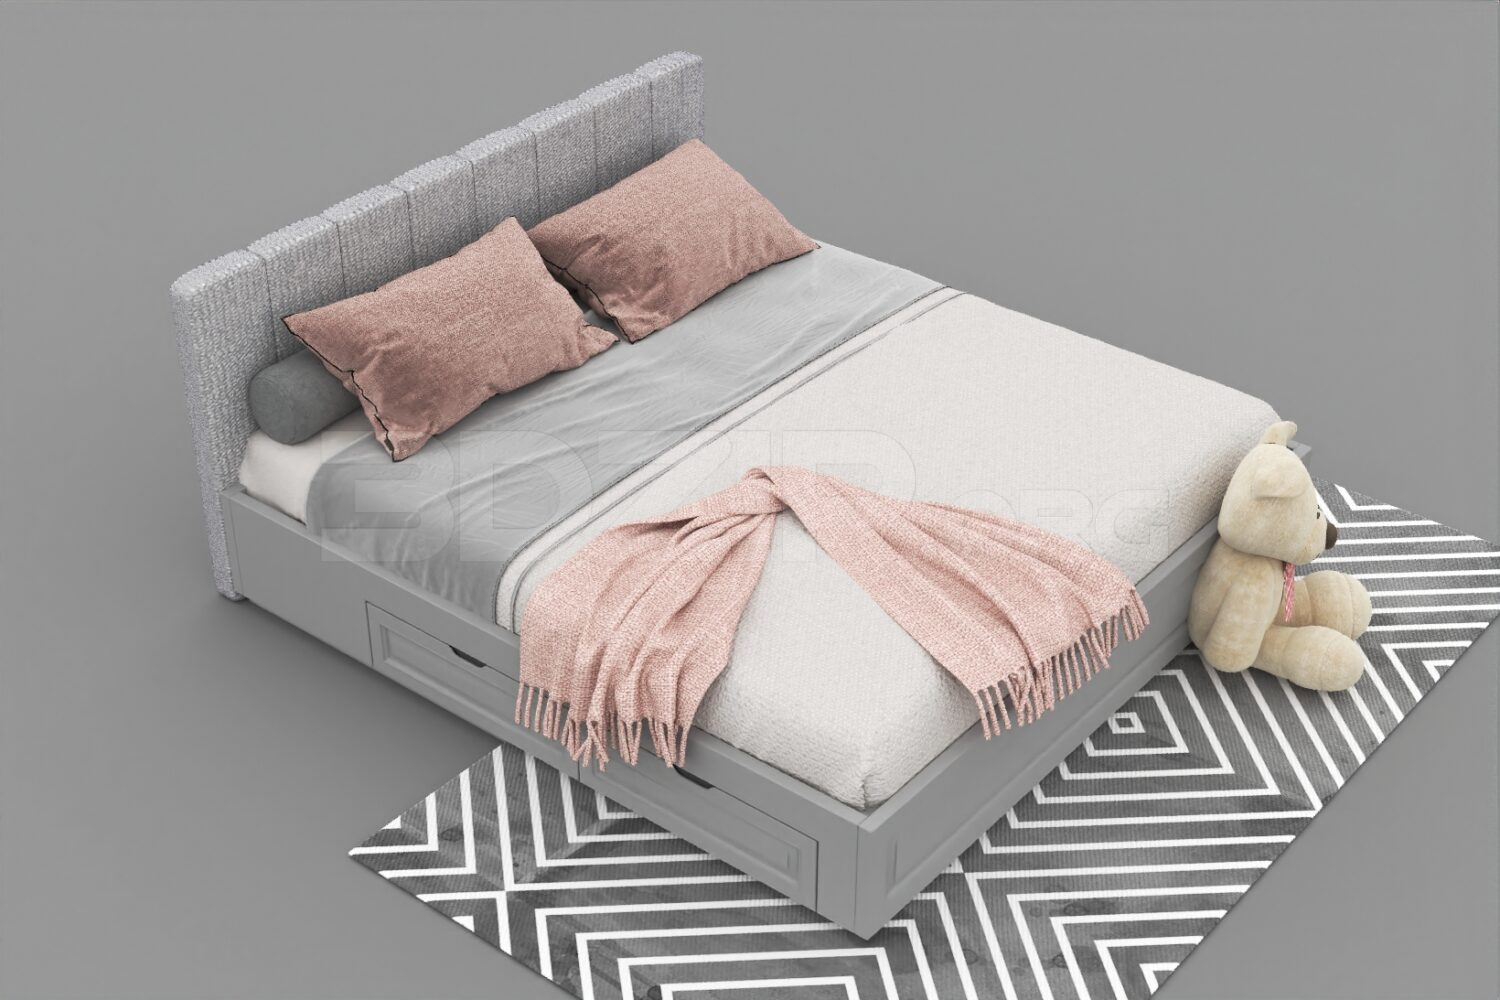 443. Download Free Bed Model By Nguyen Van Son